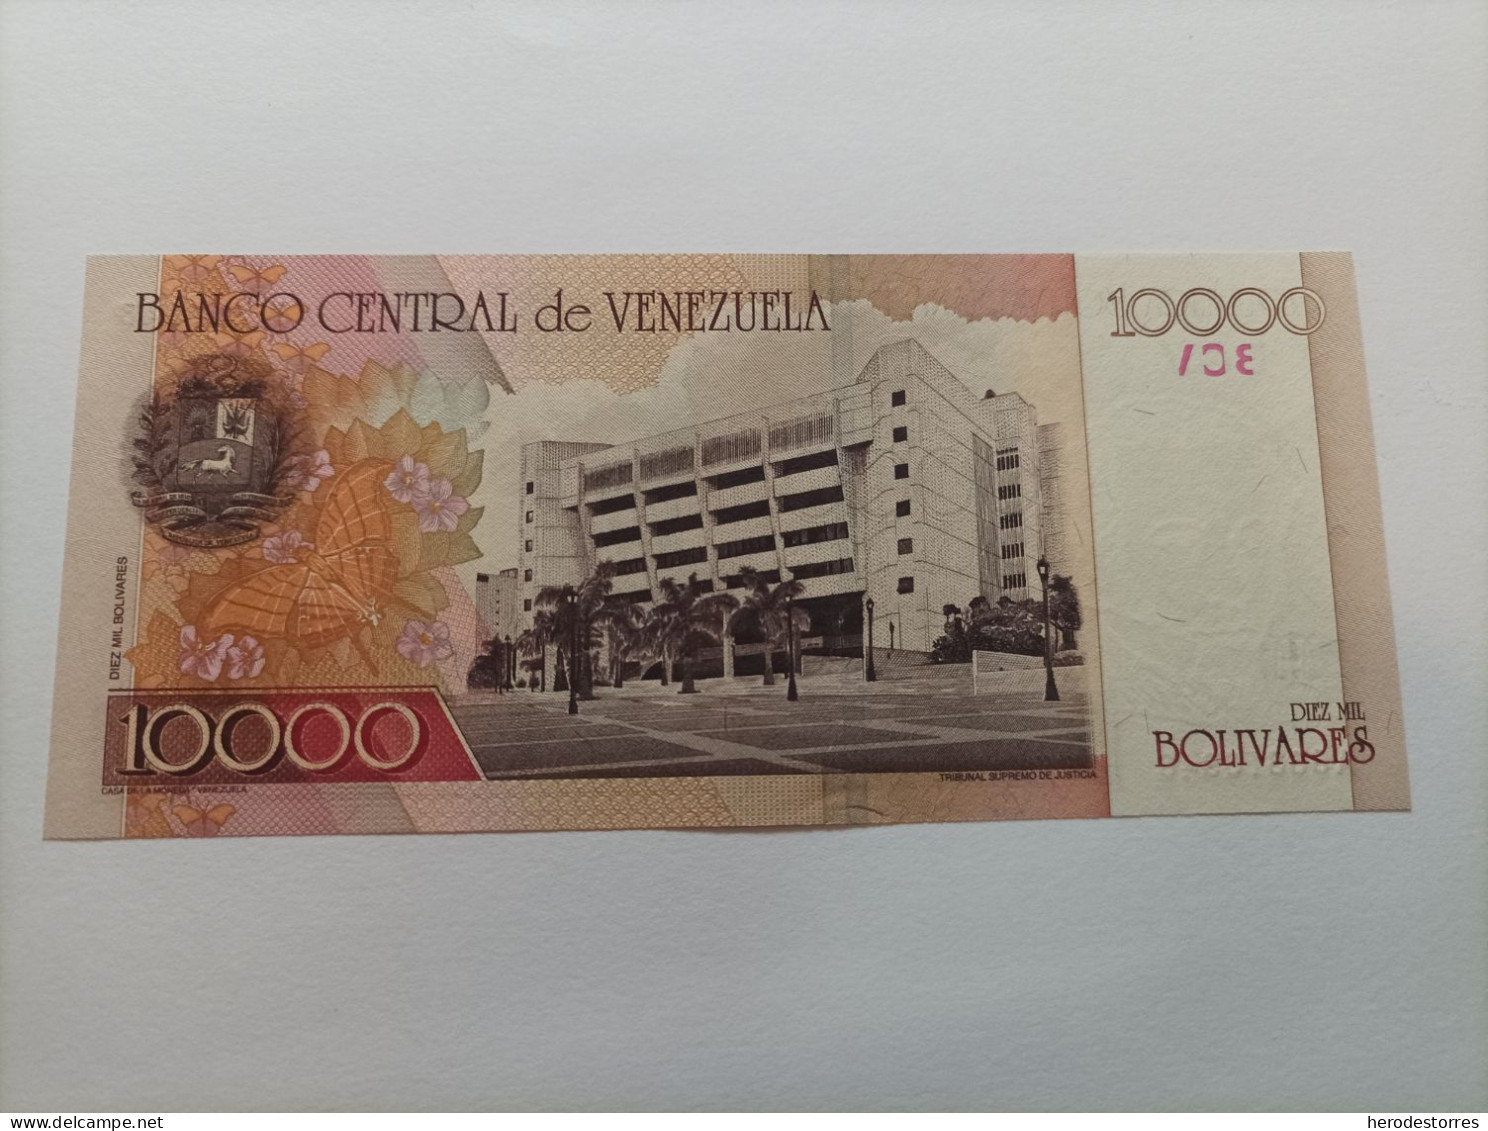 Billete De Venezuela De 10000 Bolívares, Año 2000, Serie A, UNC - Venezuela